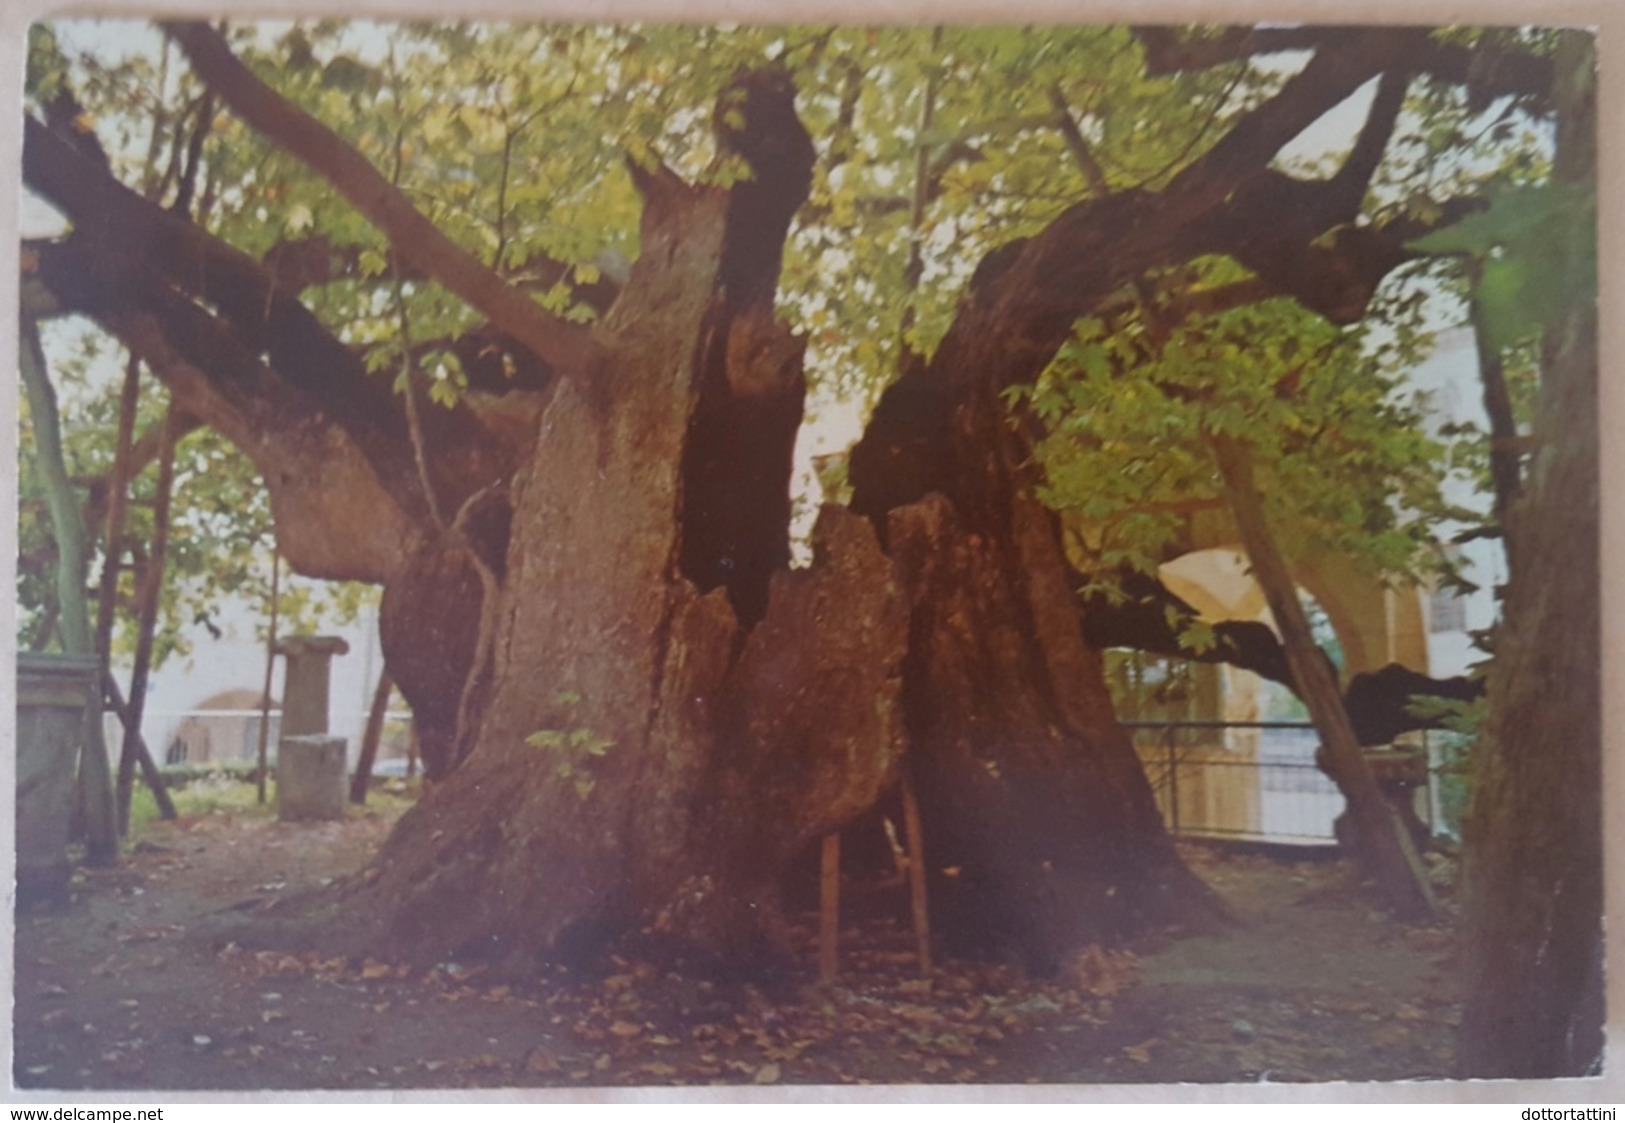 KOS - GREECE - THE PLANE-TREE OF HIPPOCRATES, OLDEST TREE OF EUROPE - PLATANE DES HIPPOKRATES - PLATANO - Alberi